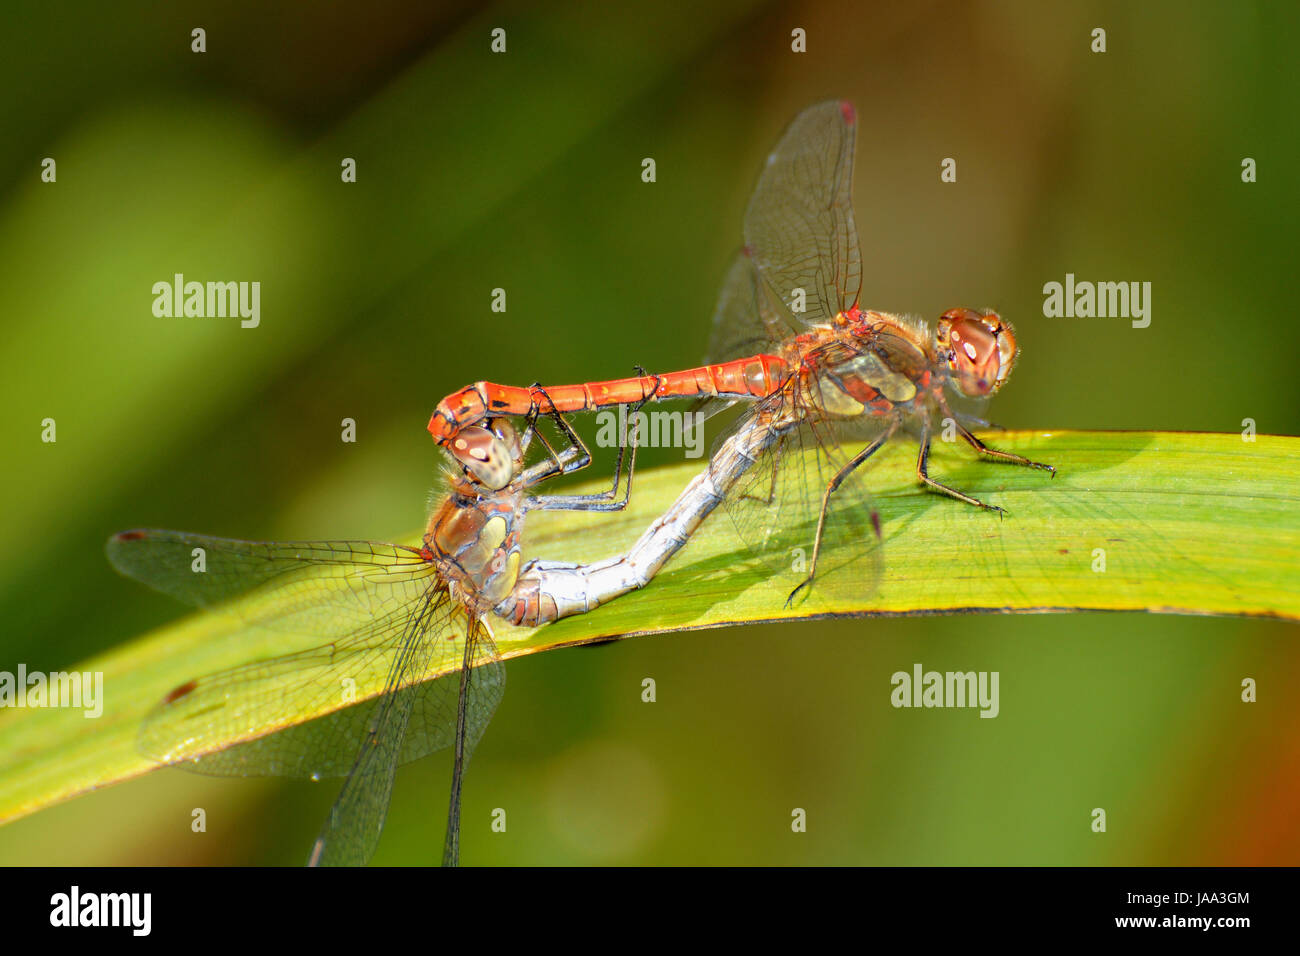 Insetto, ala, dragonfly, libellule, slim, arida, sligth, magro, gaunt, sottile, Foto Stock